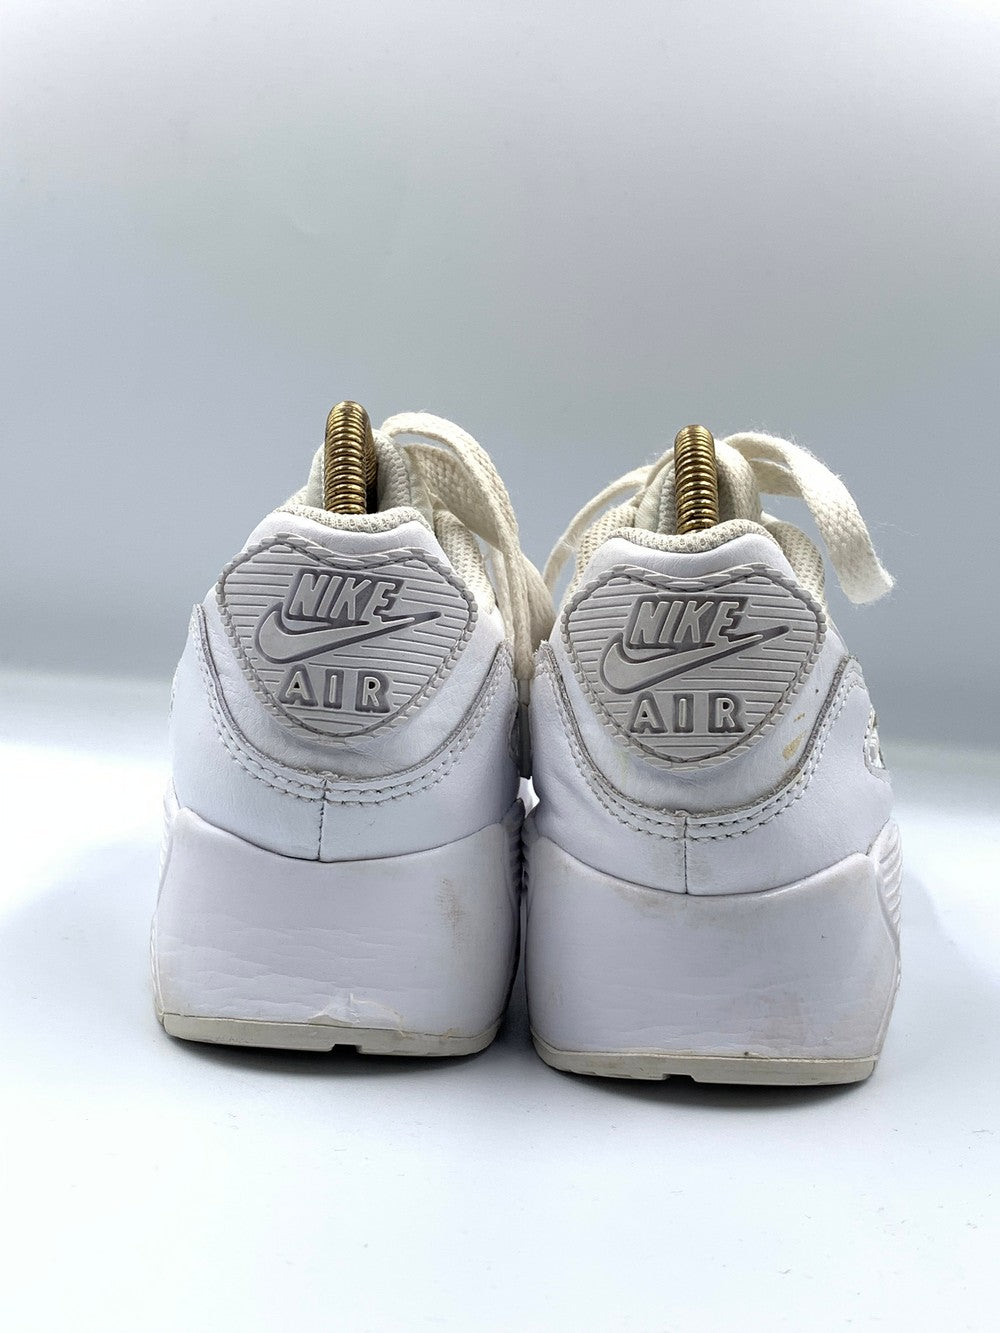 Nike Air Original Brand Sports White Running For Women Shoes